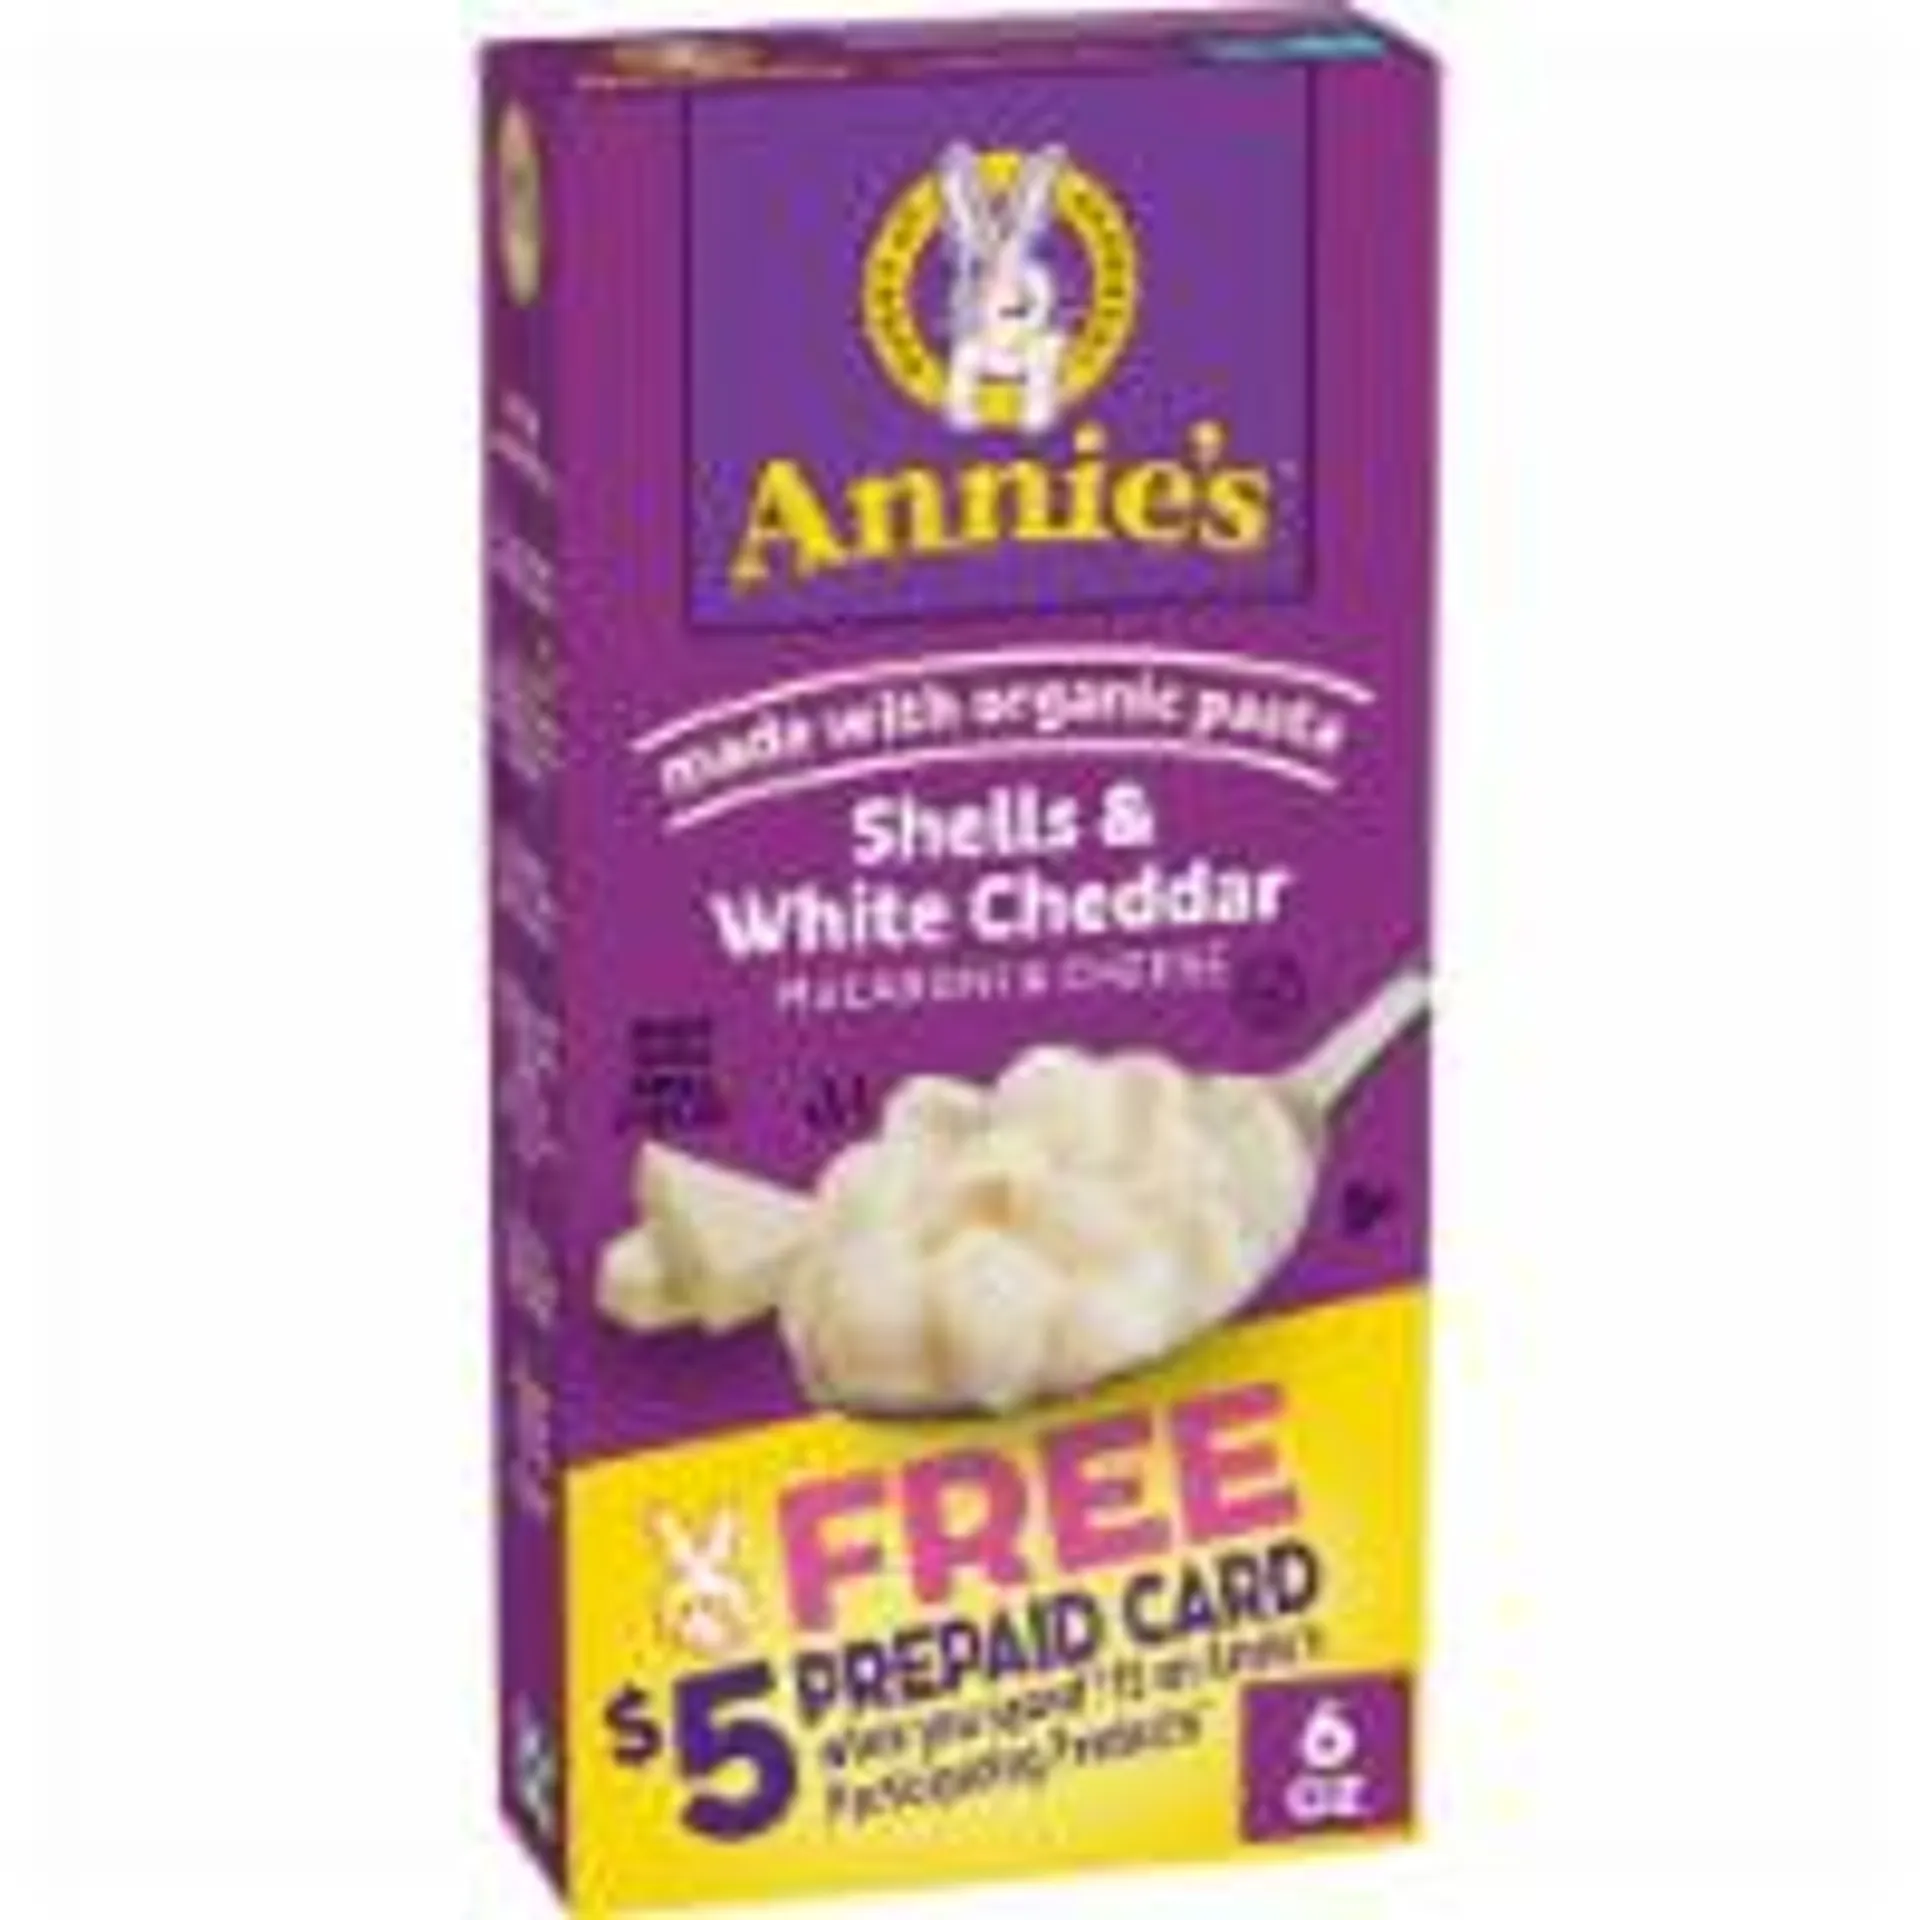 Annie’s Organic White Cheddar Shells Mac N Cheese Macaroni and Cheese Dinner